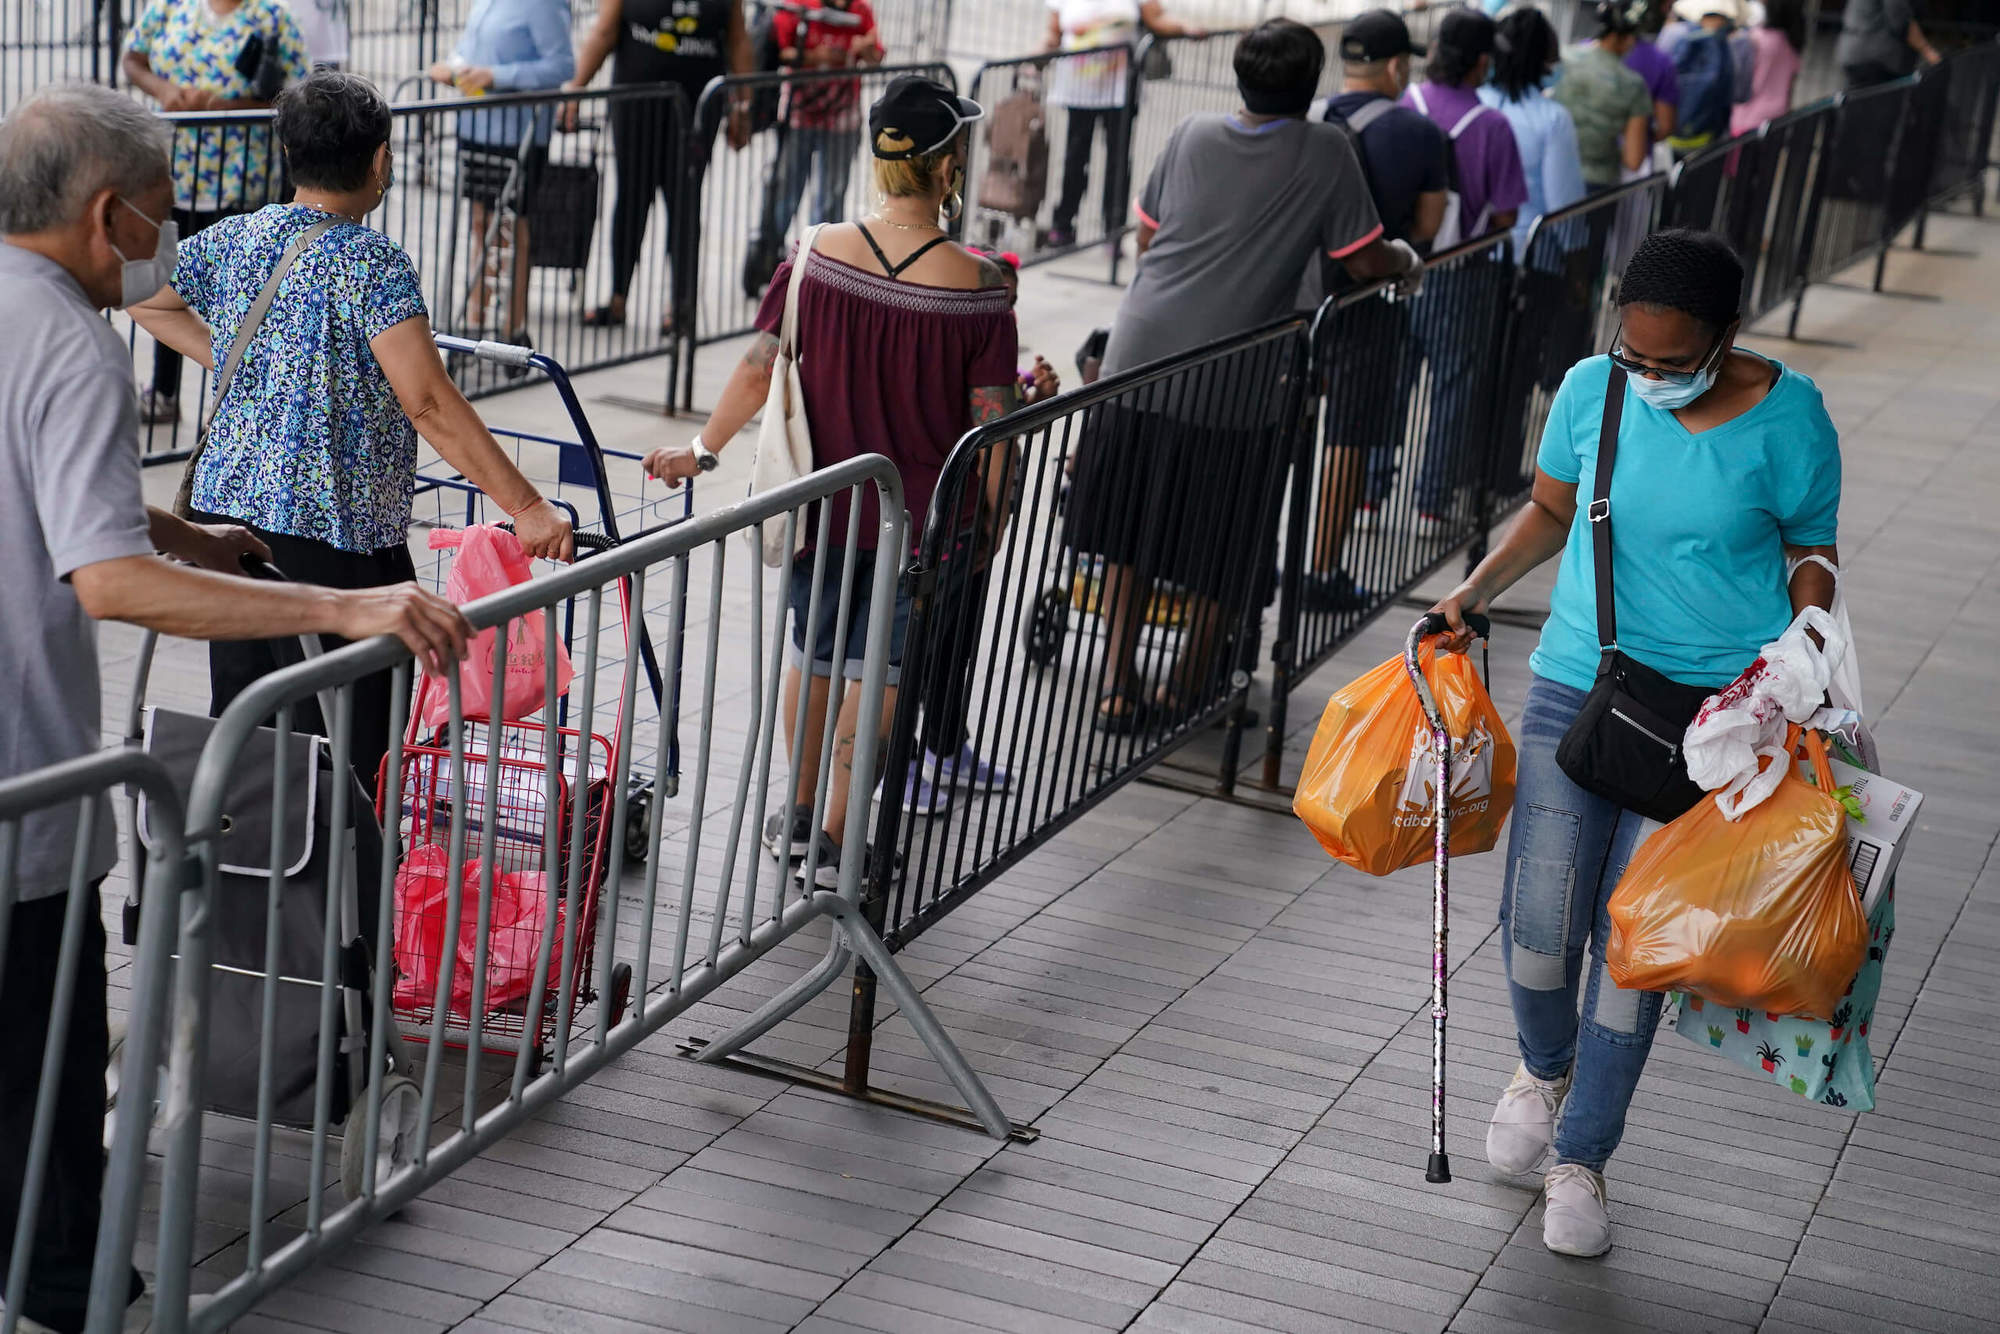 pedestrians wait in line for groceries, New York City. September 2020